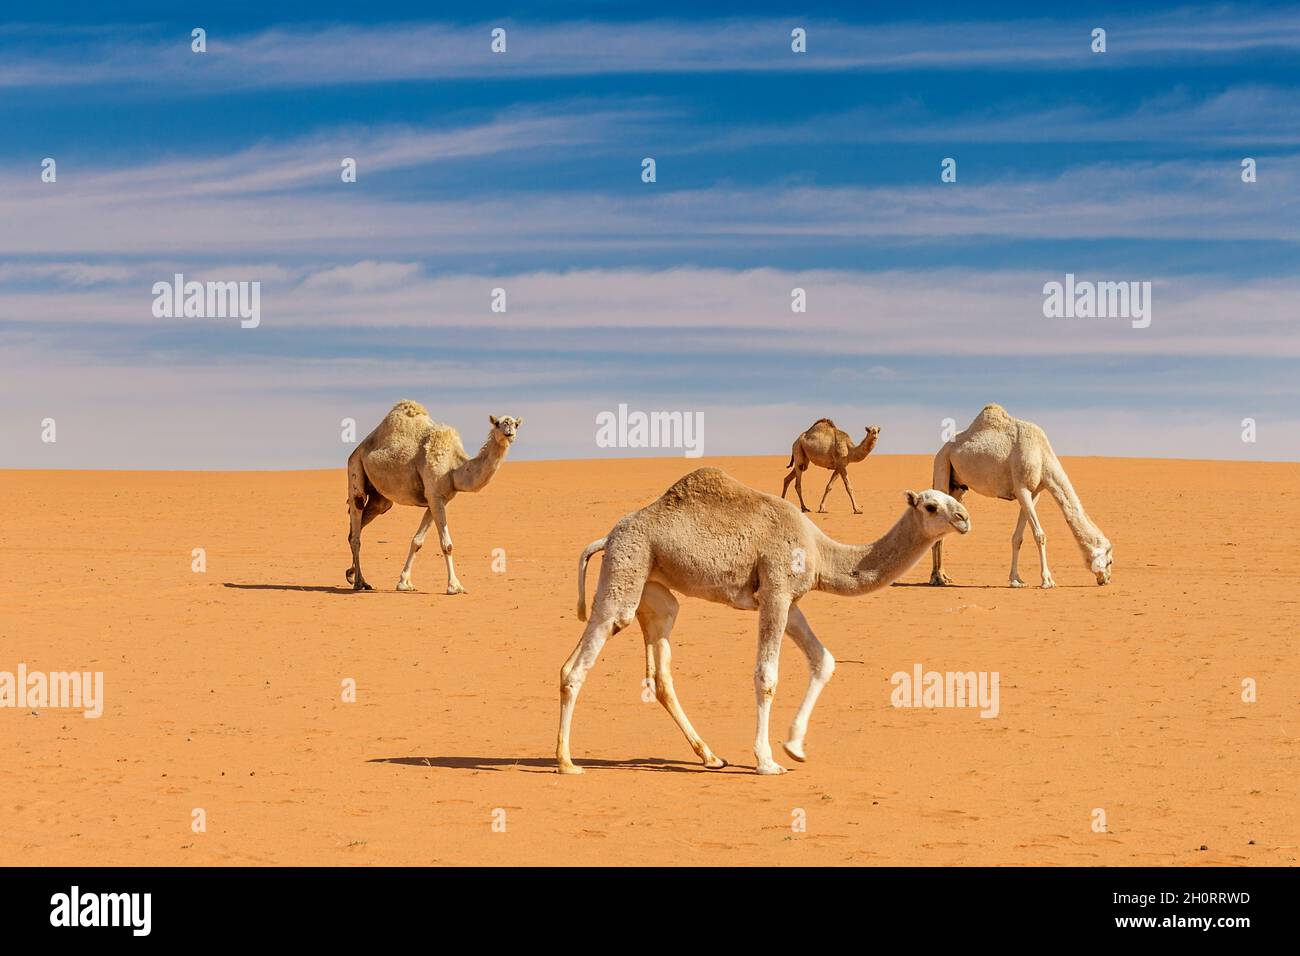 Four camels in the desert, Saudi Arabia Stock Photo